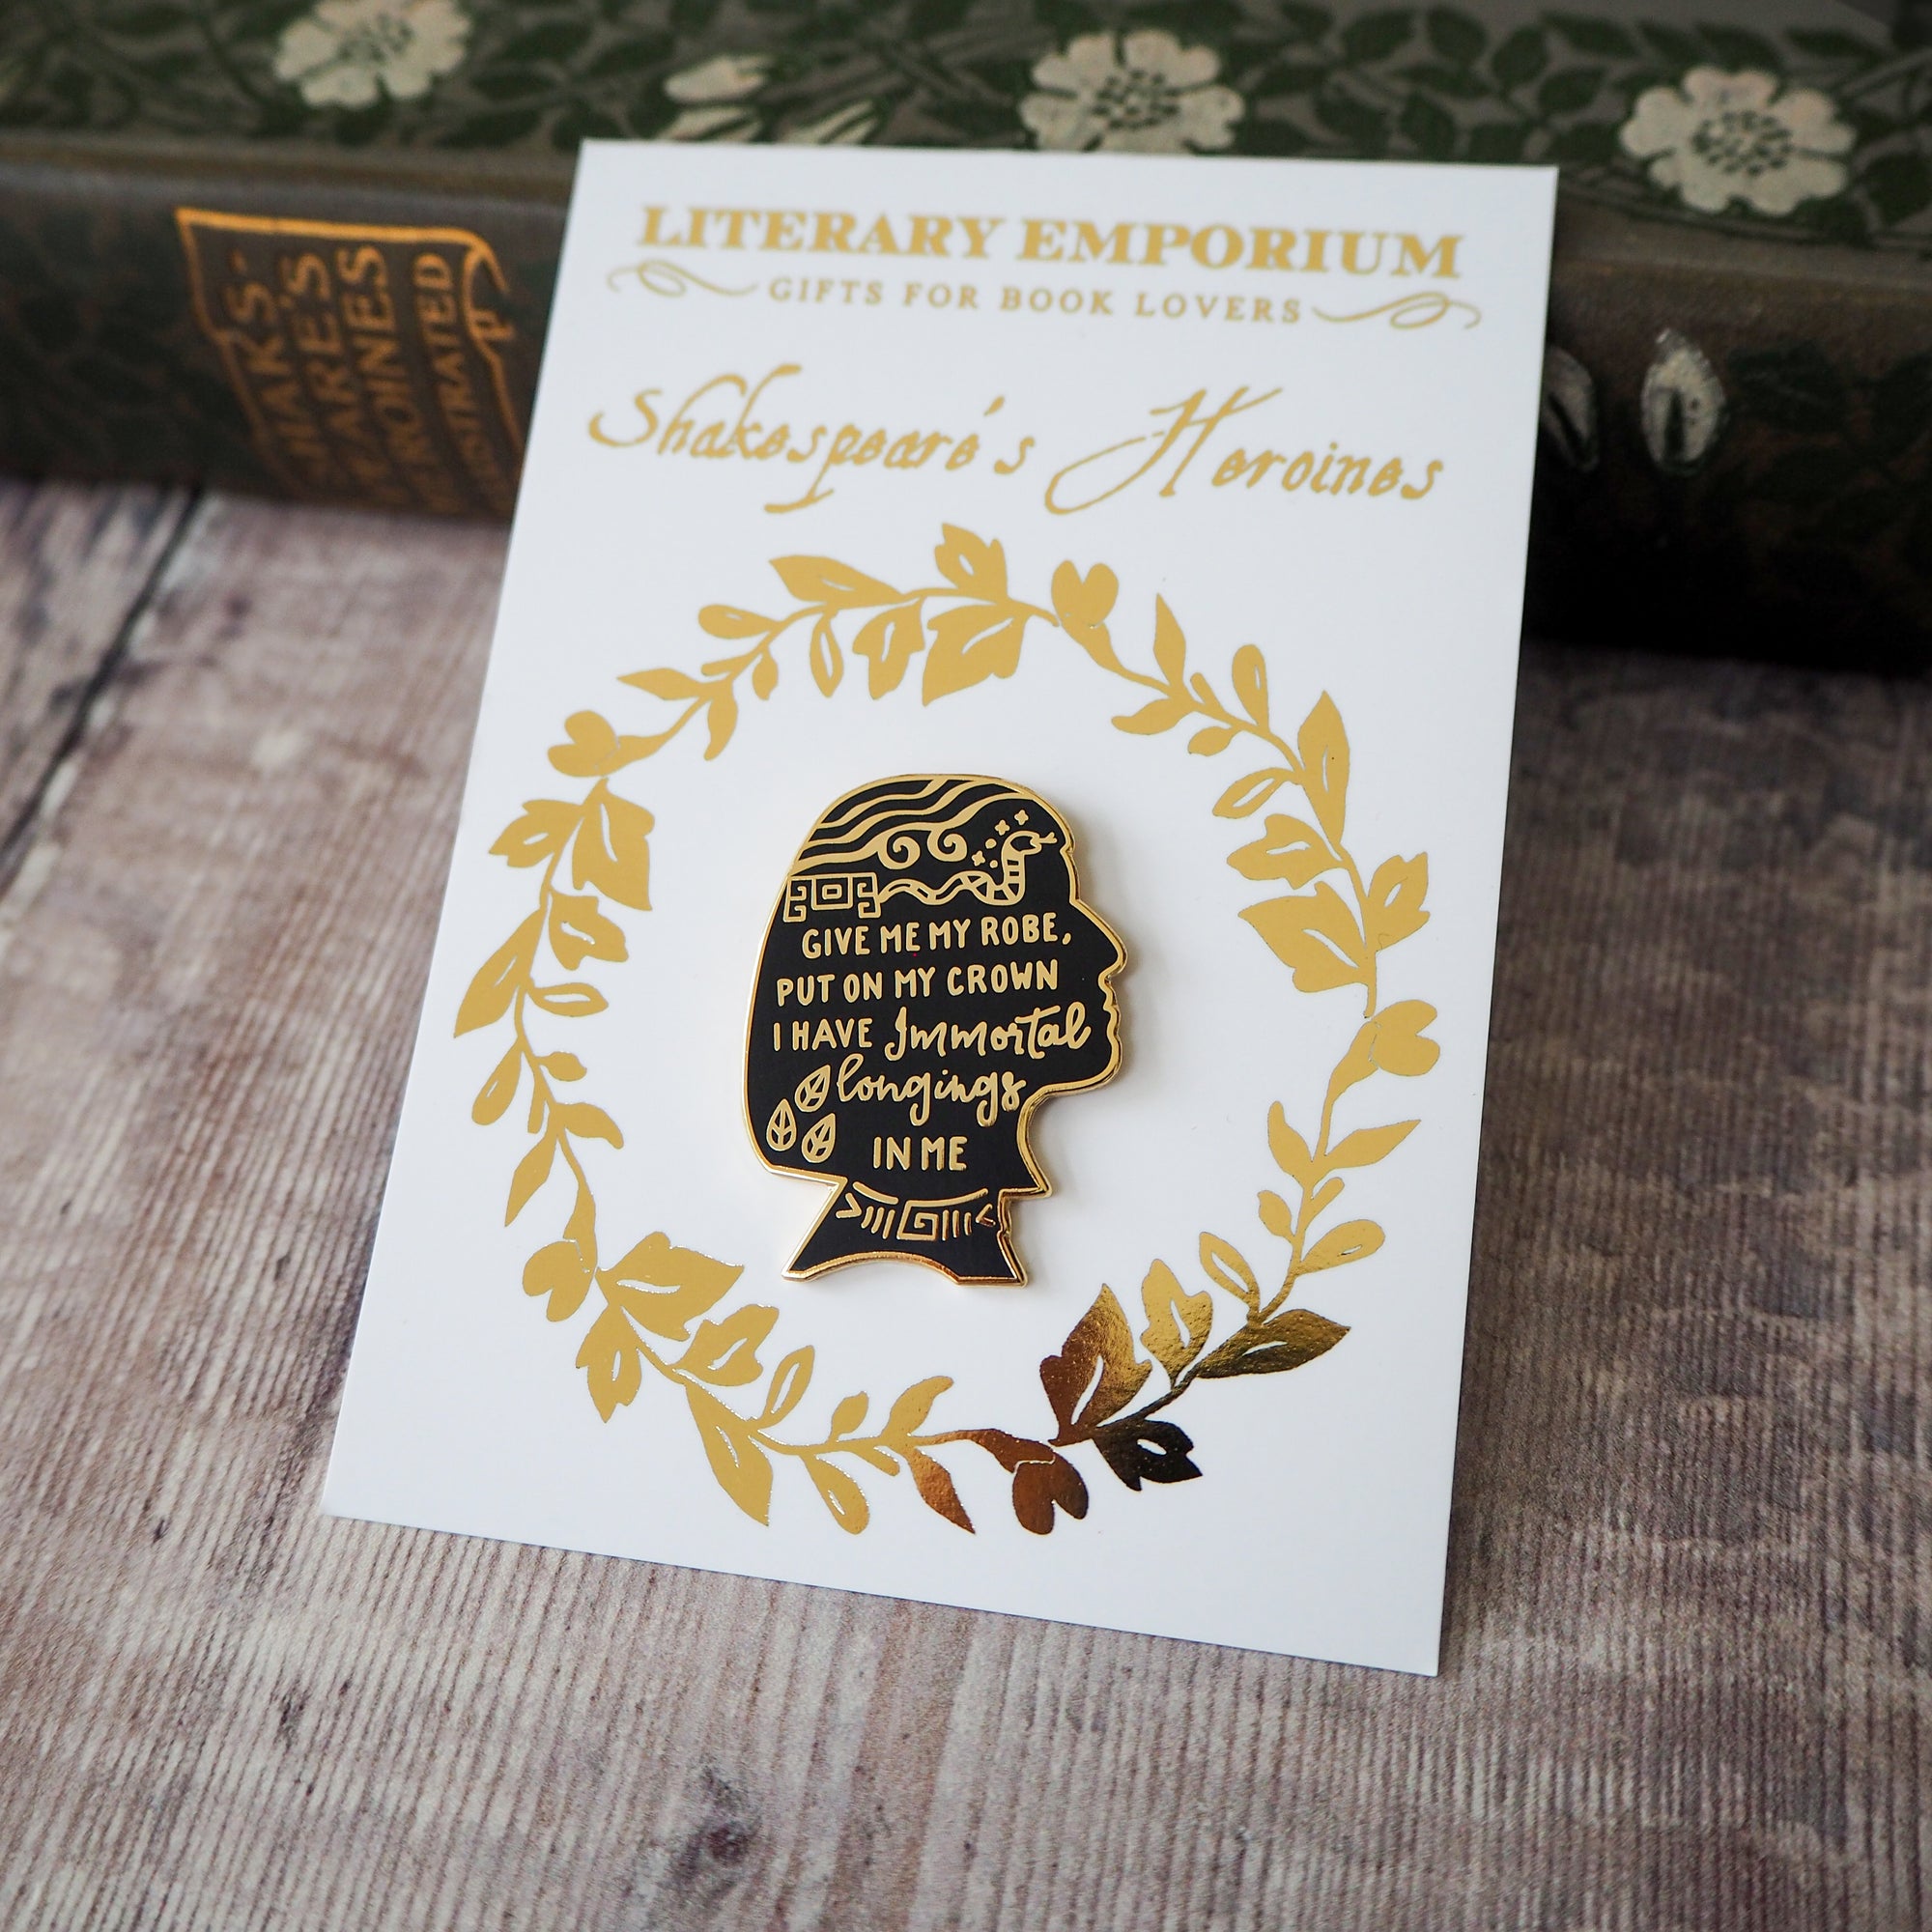 Cleopatra Enamel Pin - Shakespeare's Heroines Collection - Literary Emporium 